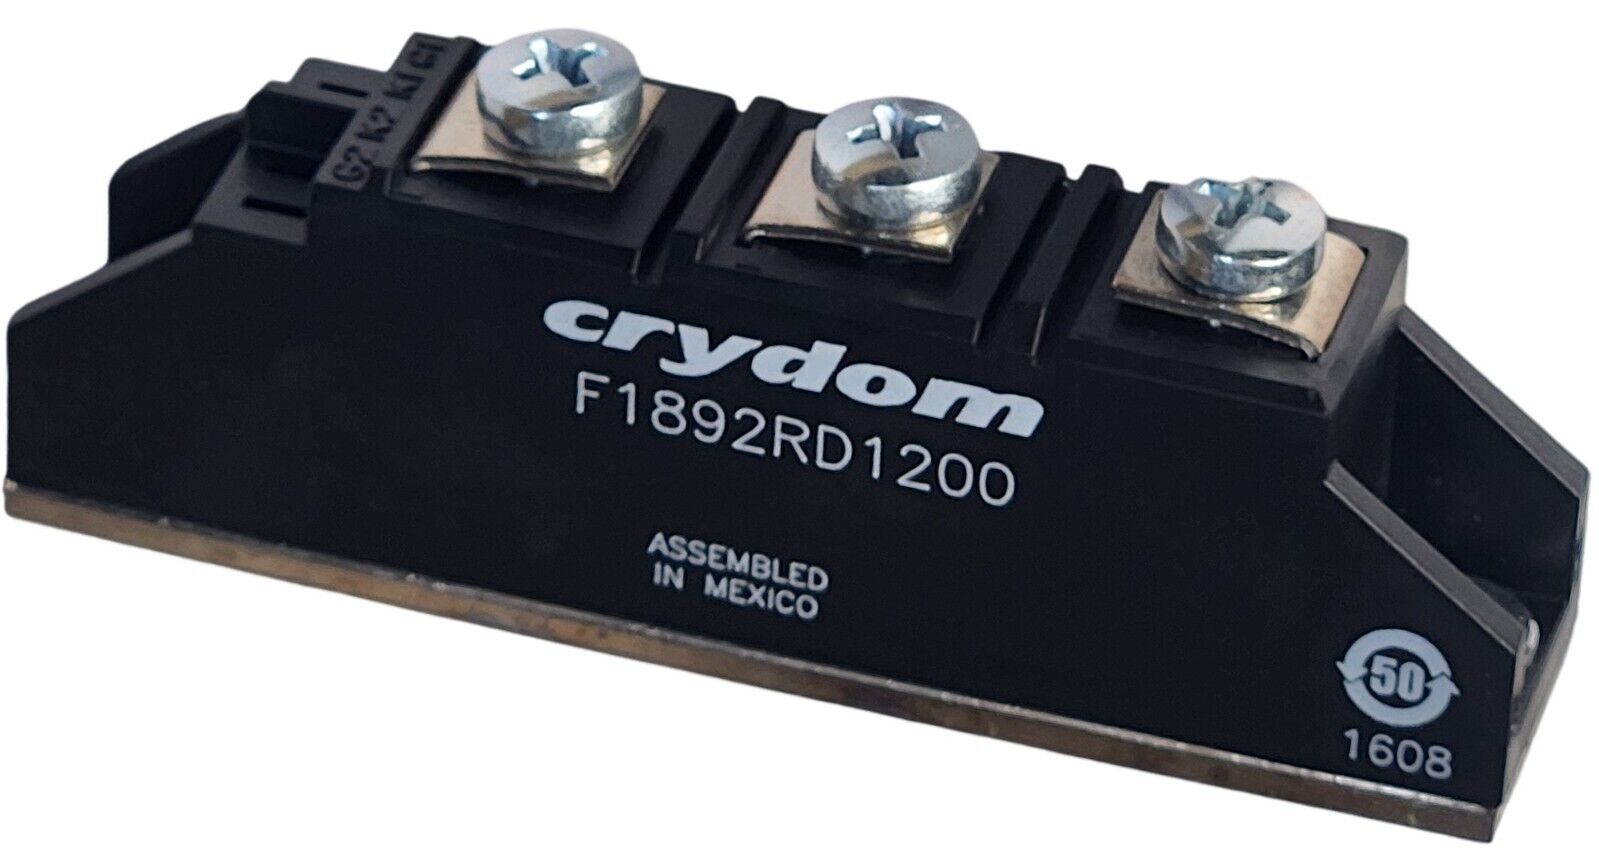 Sensata Crydom F1892RD1200 Discrete SCR Diode Power Module Rectifier